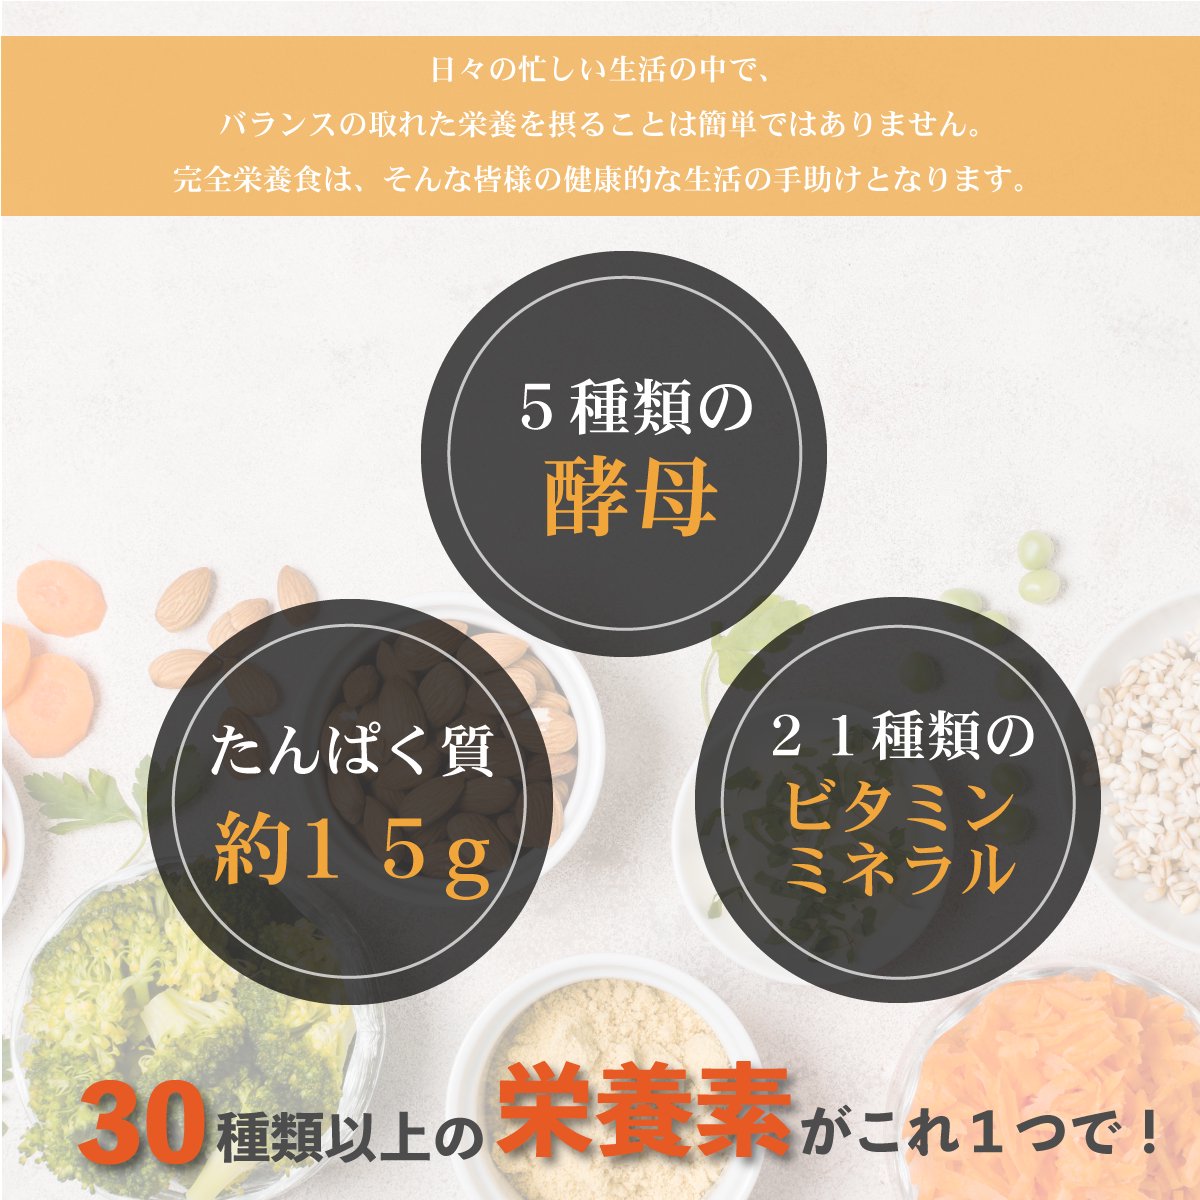 完全栄養食ー Complete nutrition/ココア - 株式会社浪花屋商店 540